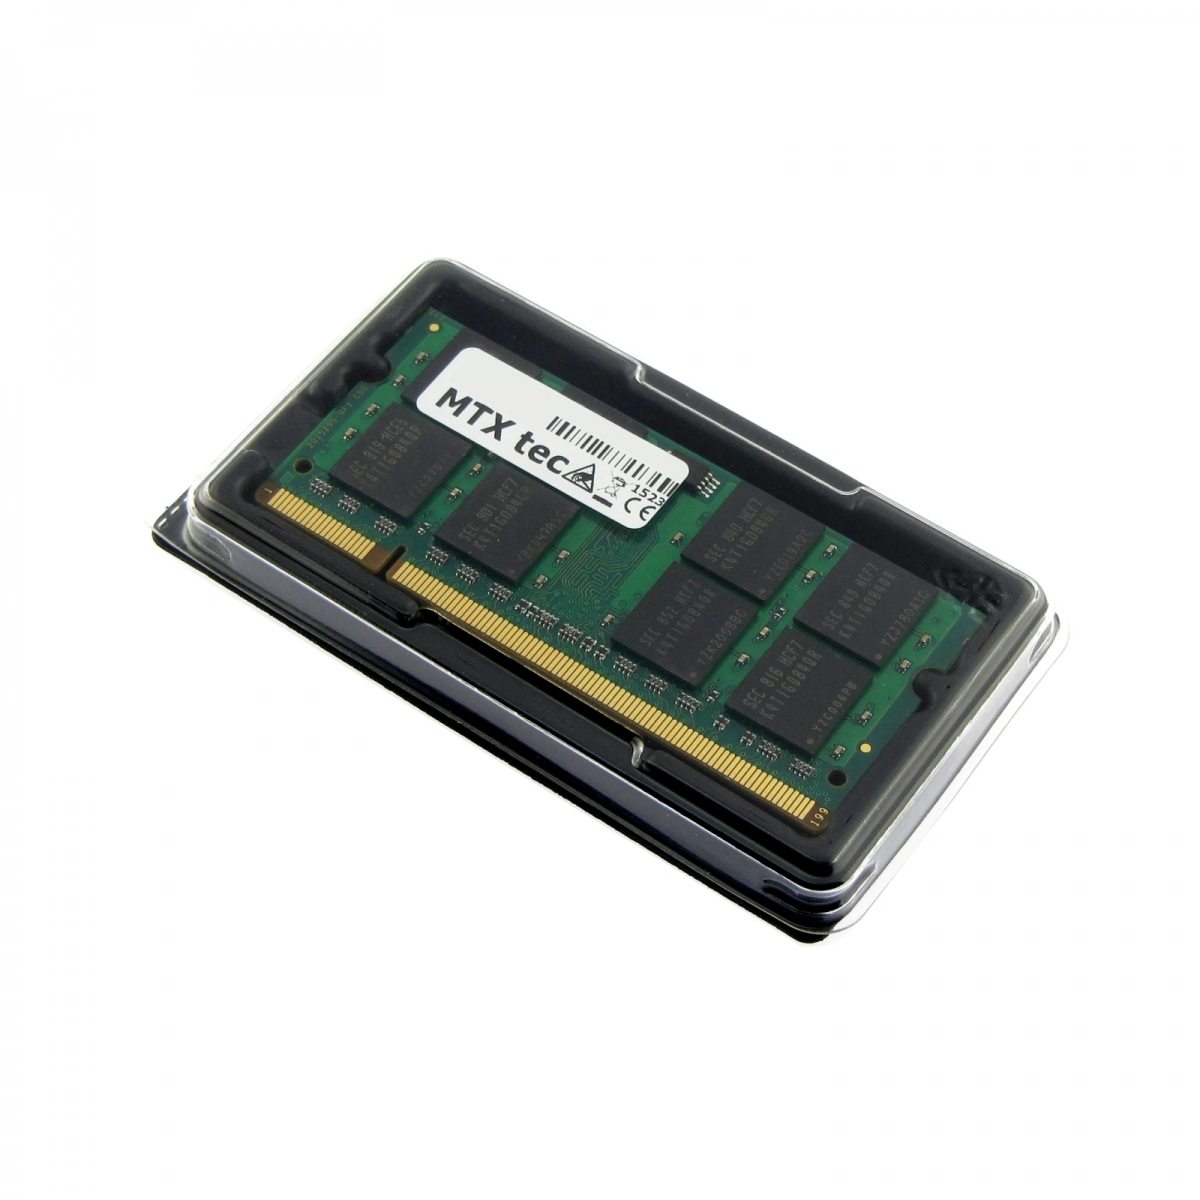 MTXtec Arbeitsspeicher 2 GB RAM für LENOVO ThinkPad T60 (6374)